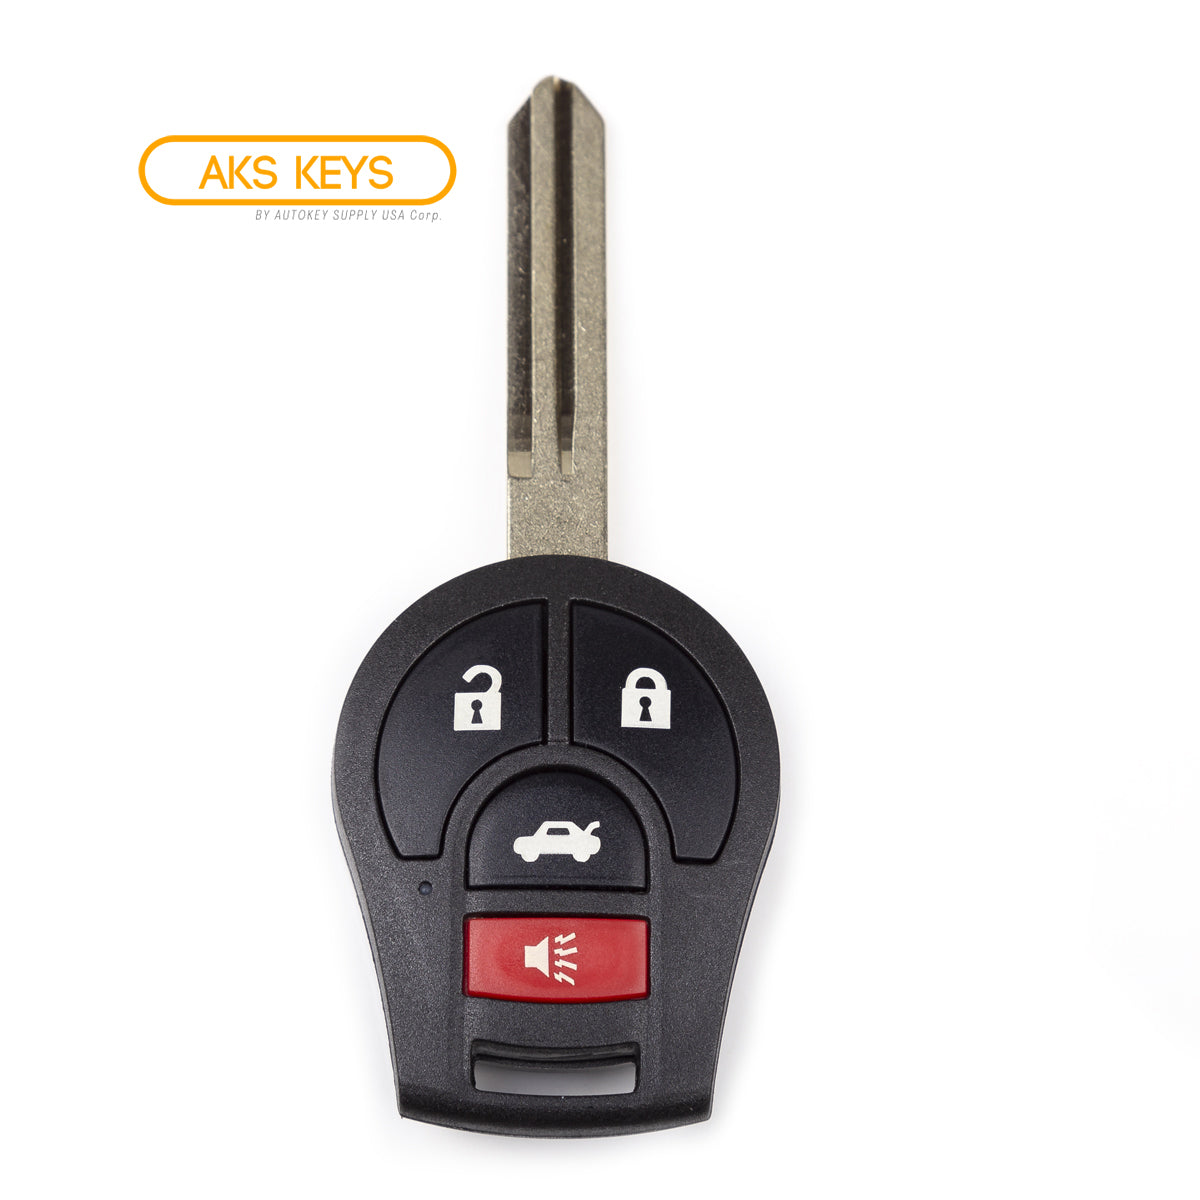 2010 Nissan Rogue Key Fob - Aftermarket - 4 Buttons Fob FCC# CWTWB1U751 - ID46 Chip